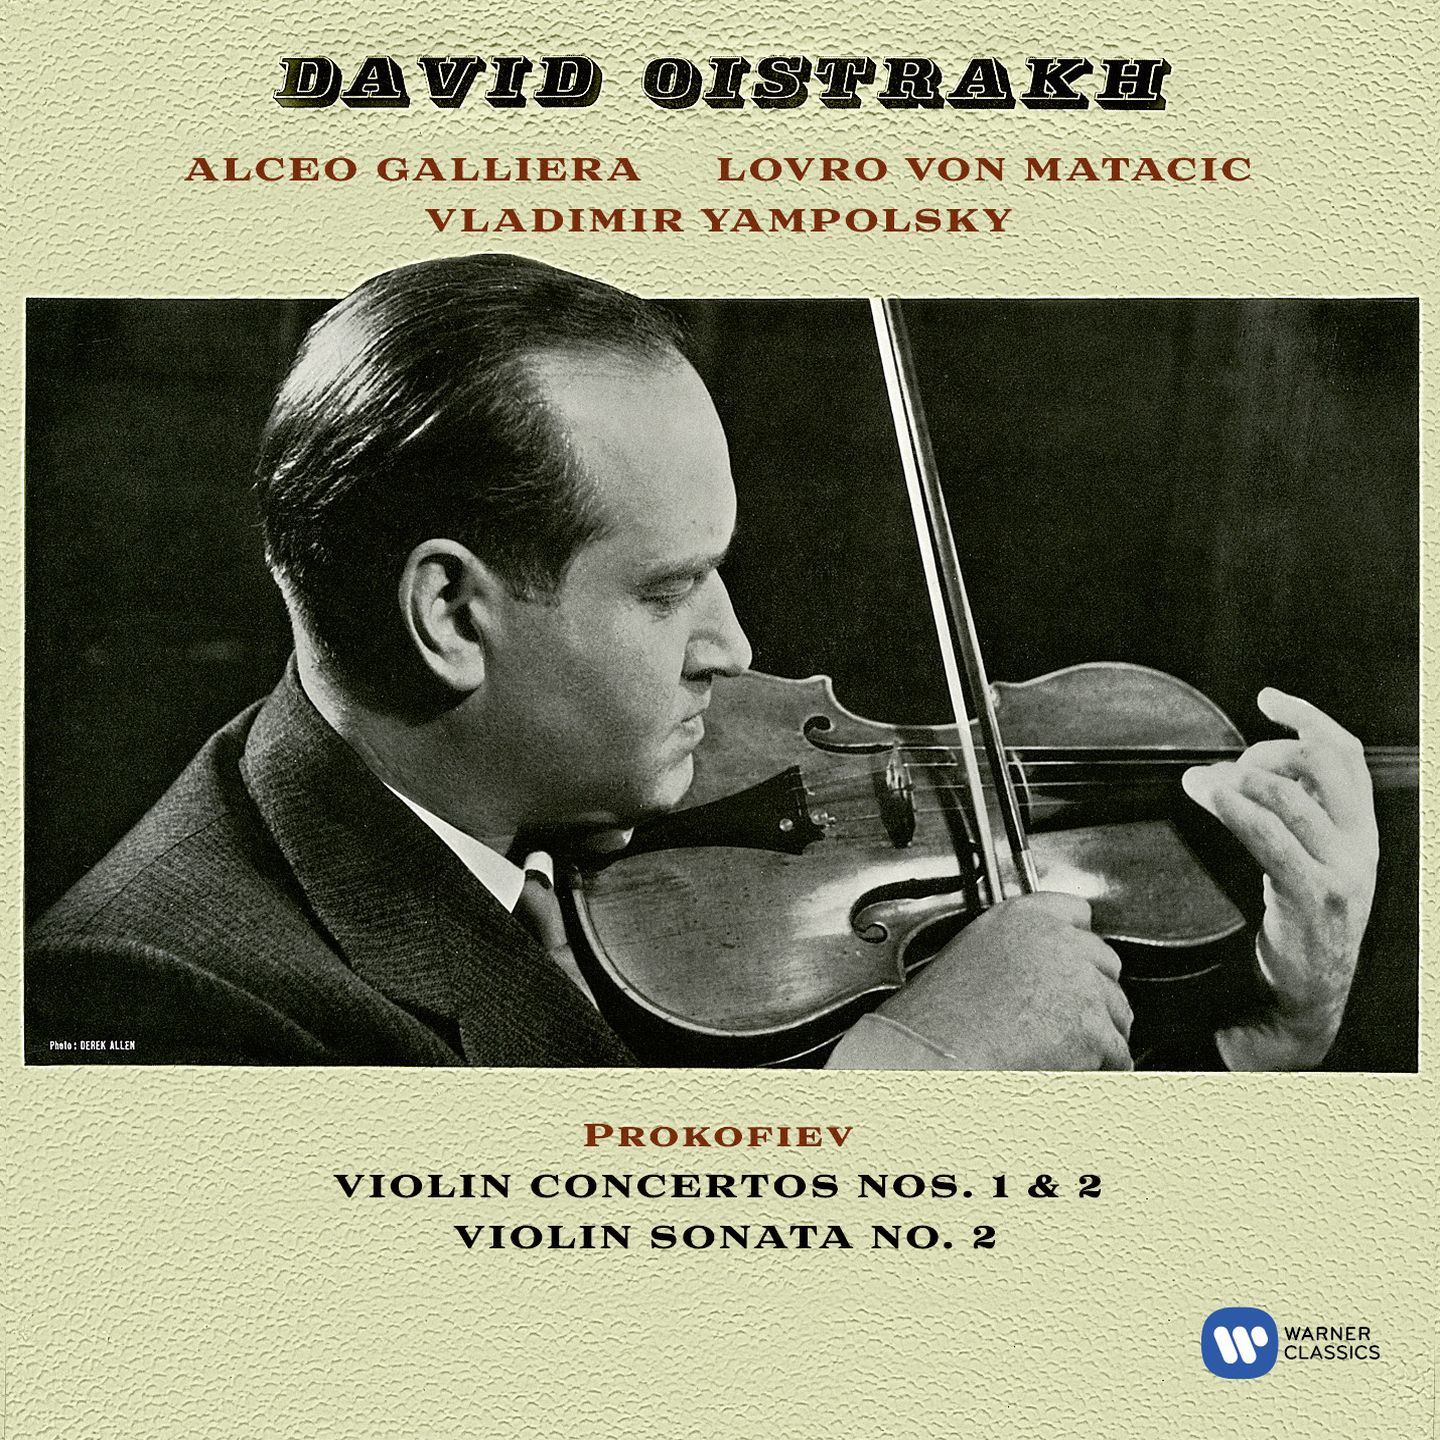 Violin Concerto No. 1 in D Major, Op. 19: III. Moderato - Allegro moderato